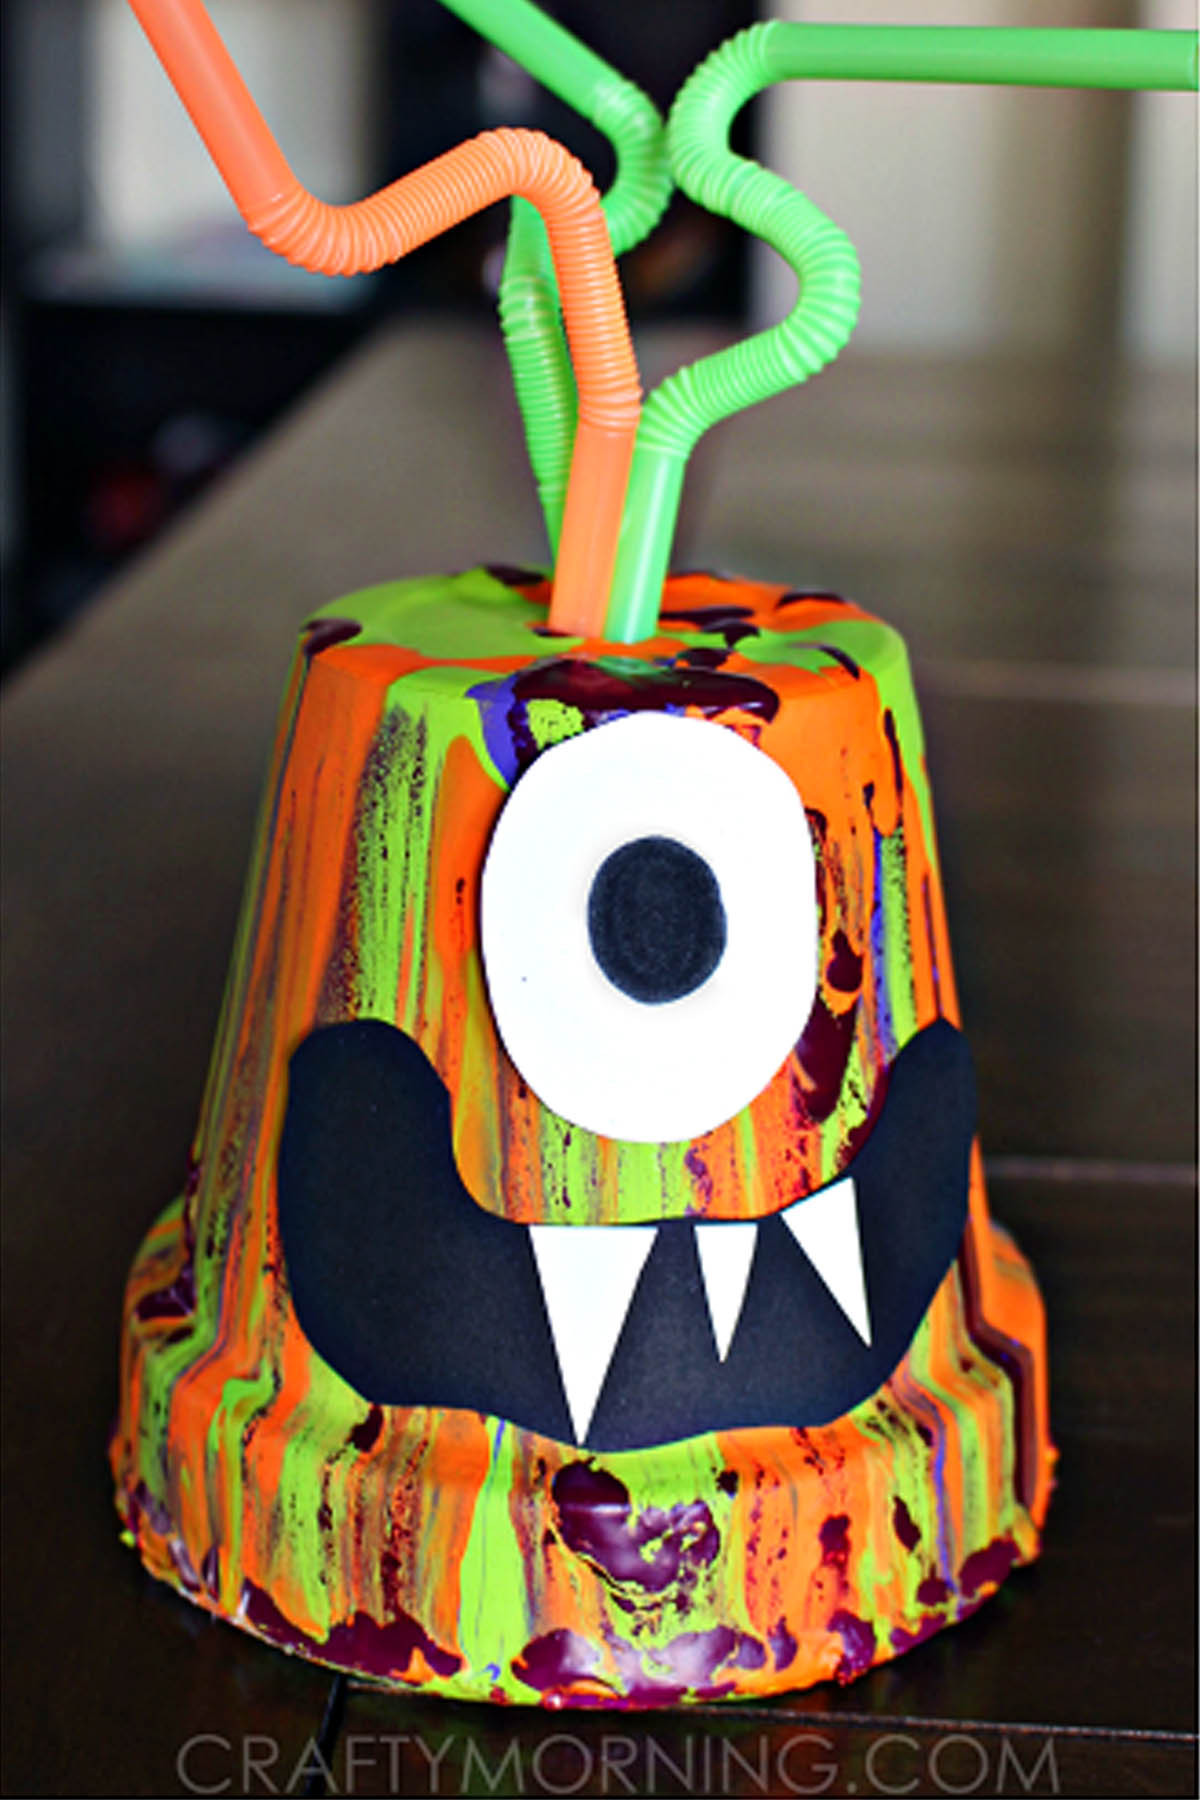 Halloween Kids Craft Ideas
 20 Easy Halloween Crafts for Kids Fun Halloween Craft